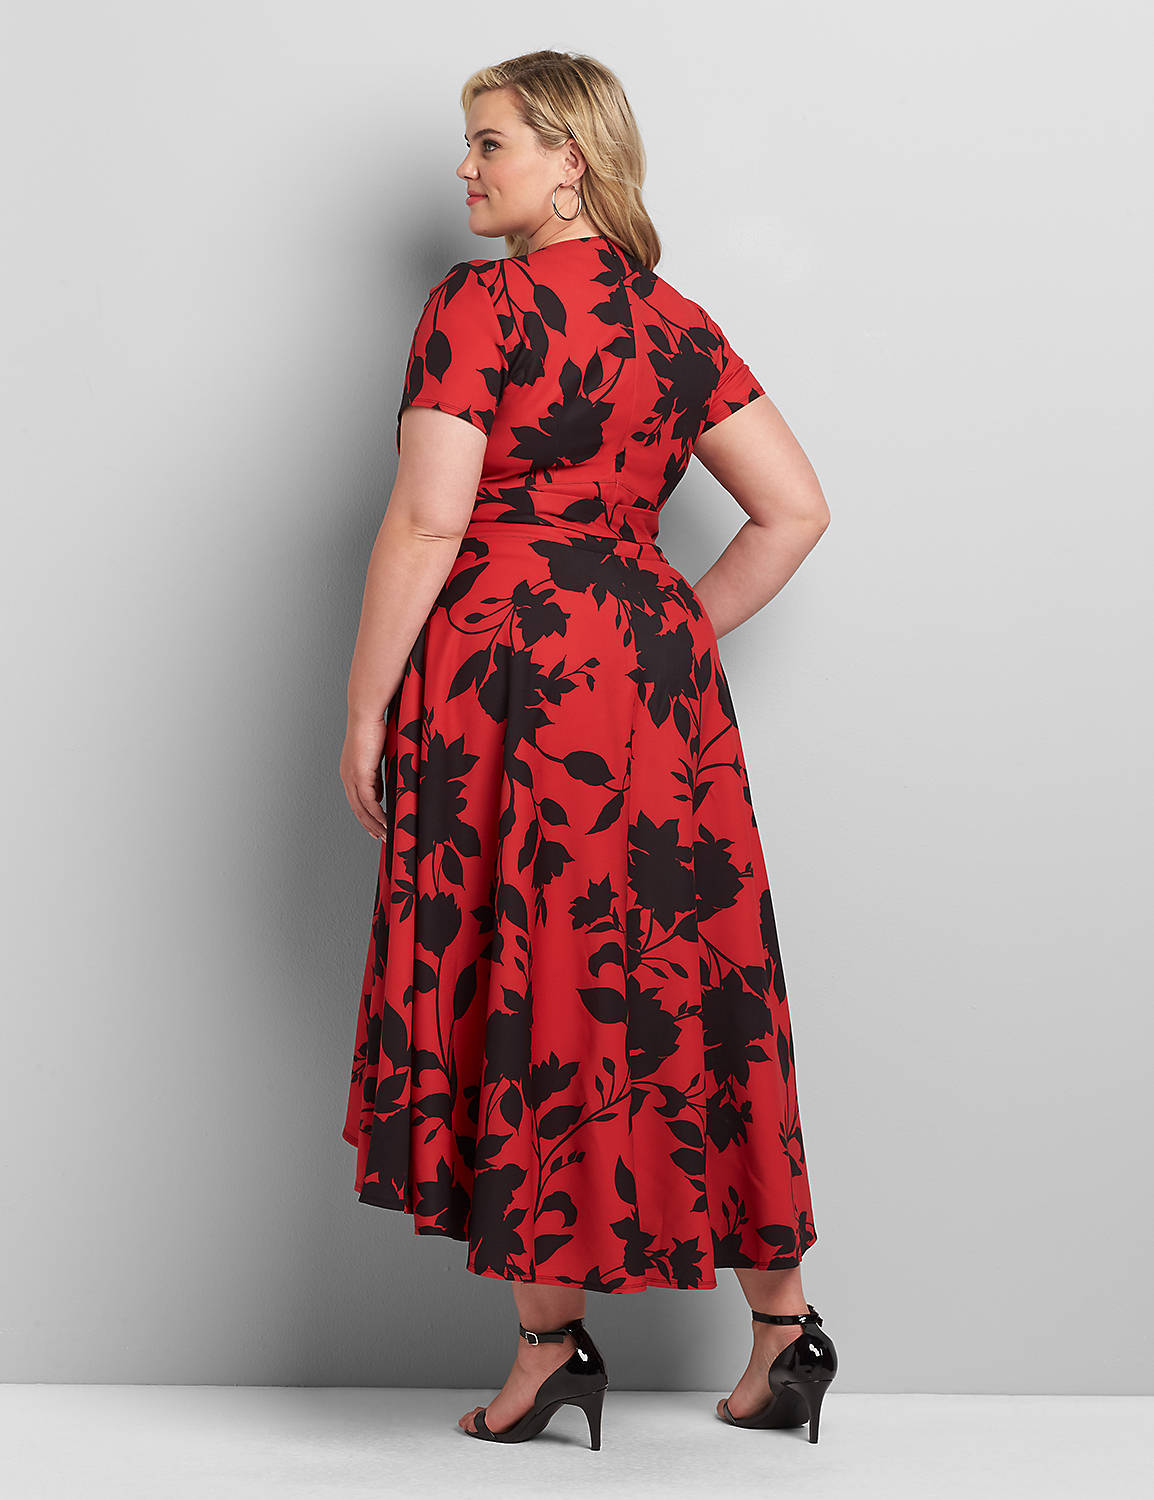 Printed Lena High-Low Midi Dress Product Image 2